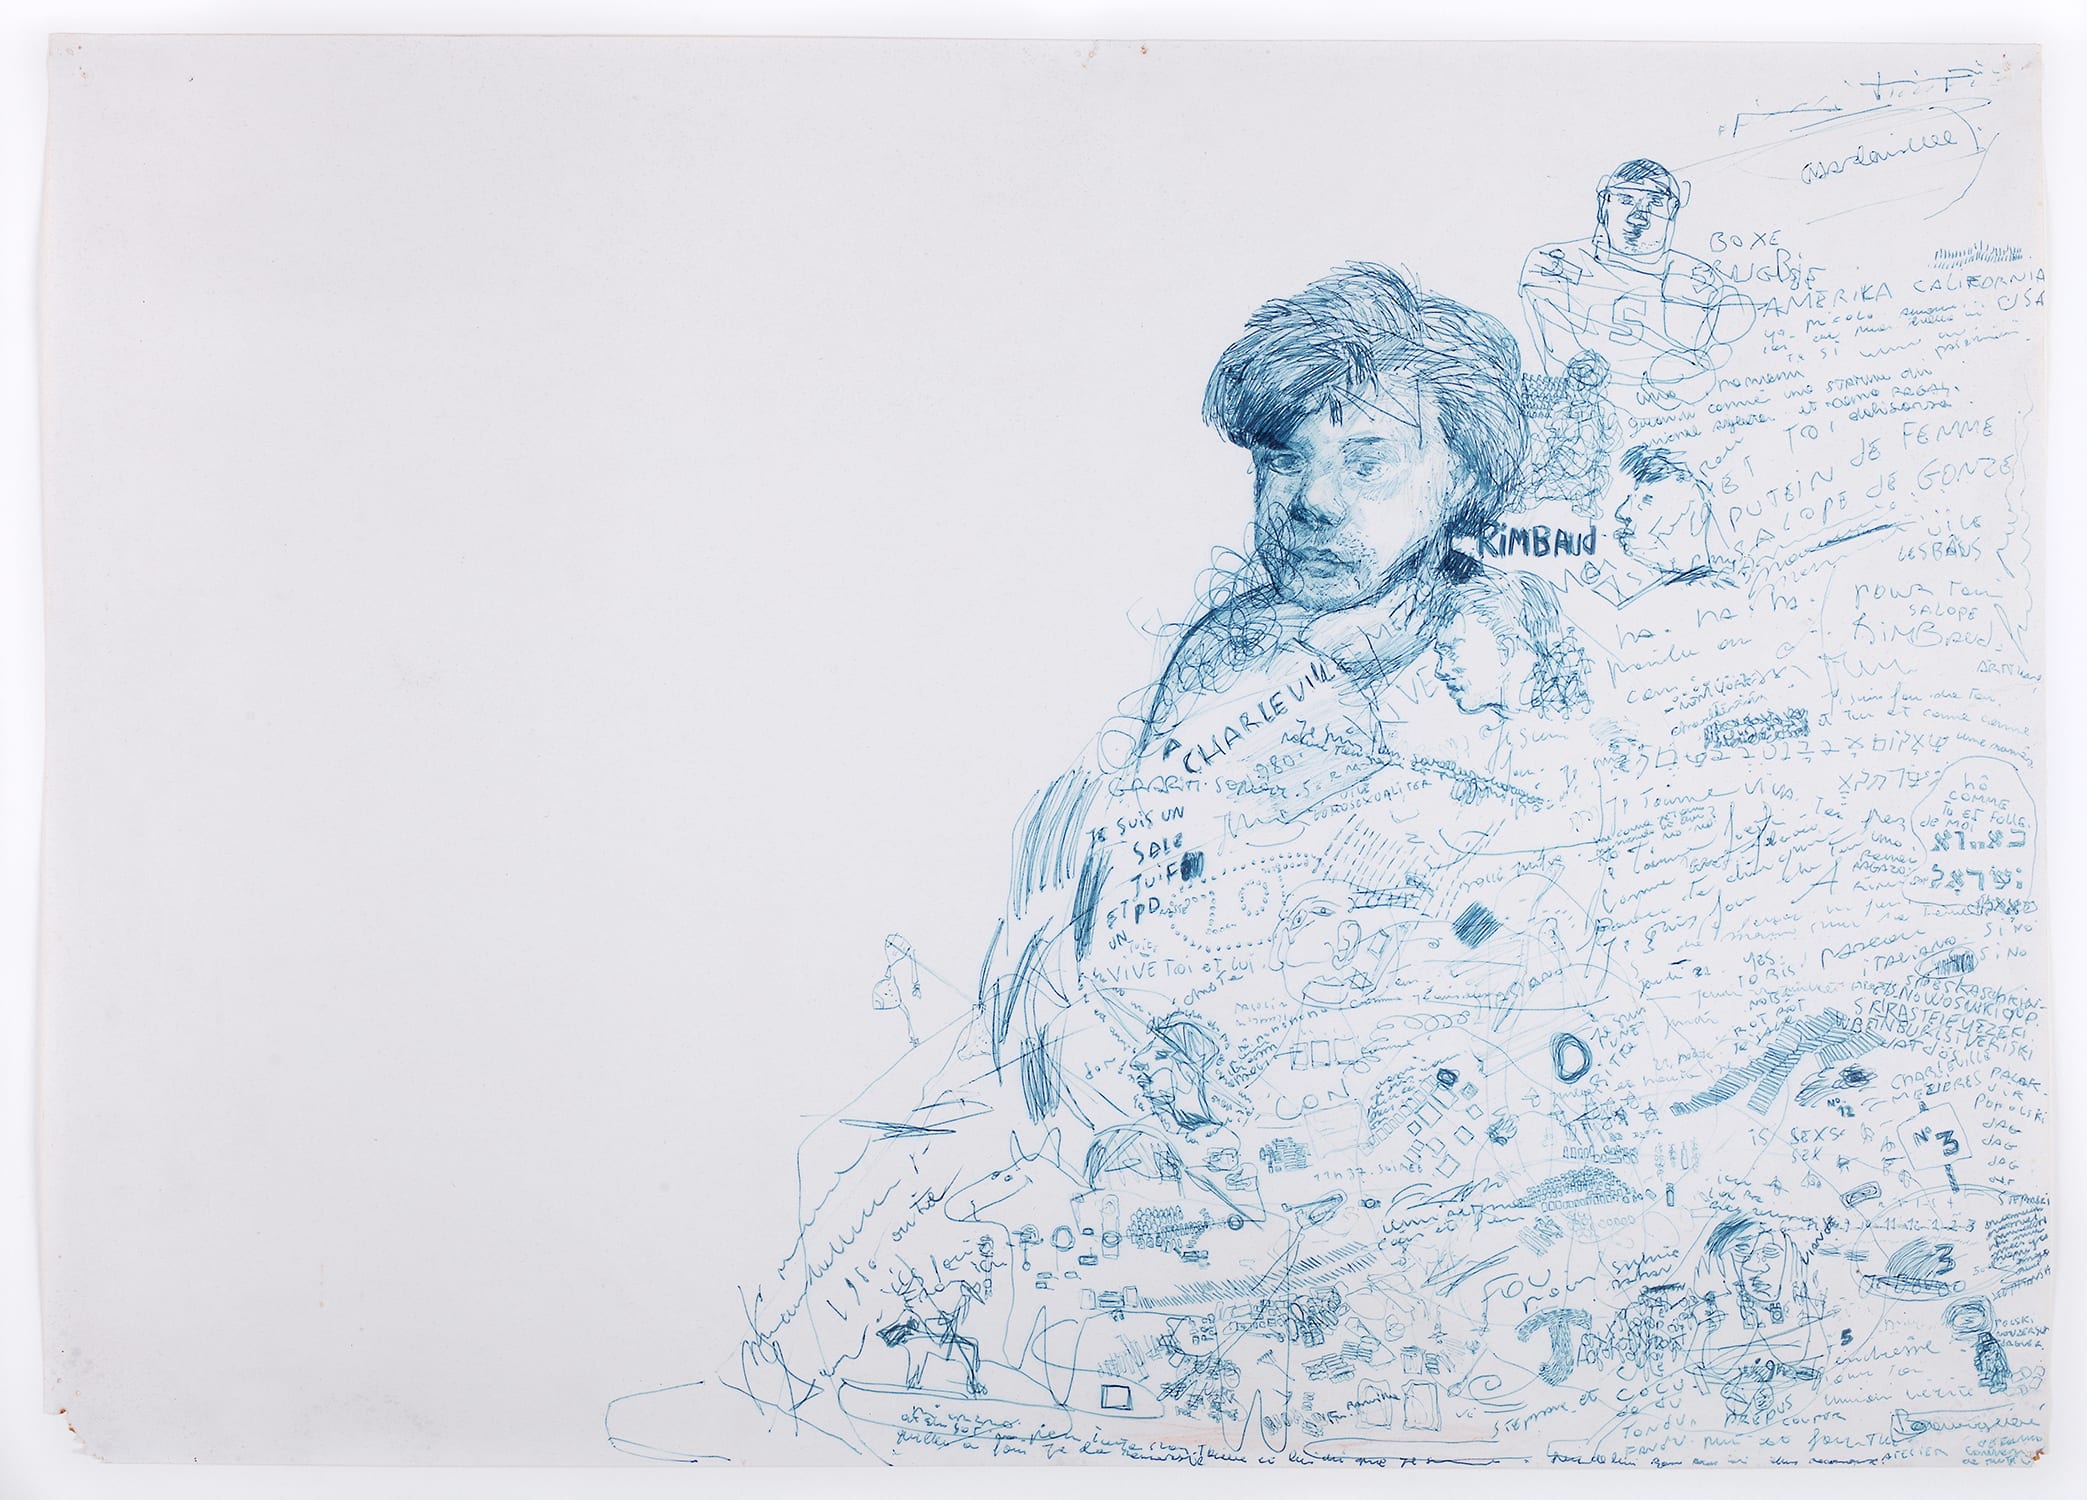 Stéphane Mandelbaum, Rimbaud, 1980. Courtesy of Mandelbaum Family Collection, Fontenoille, and galerie zlotowski, Paris.